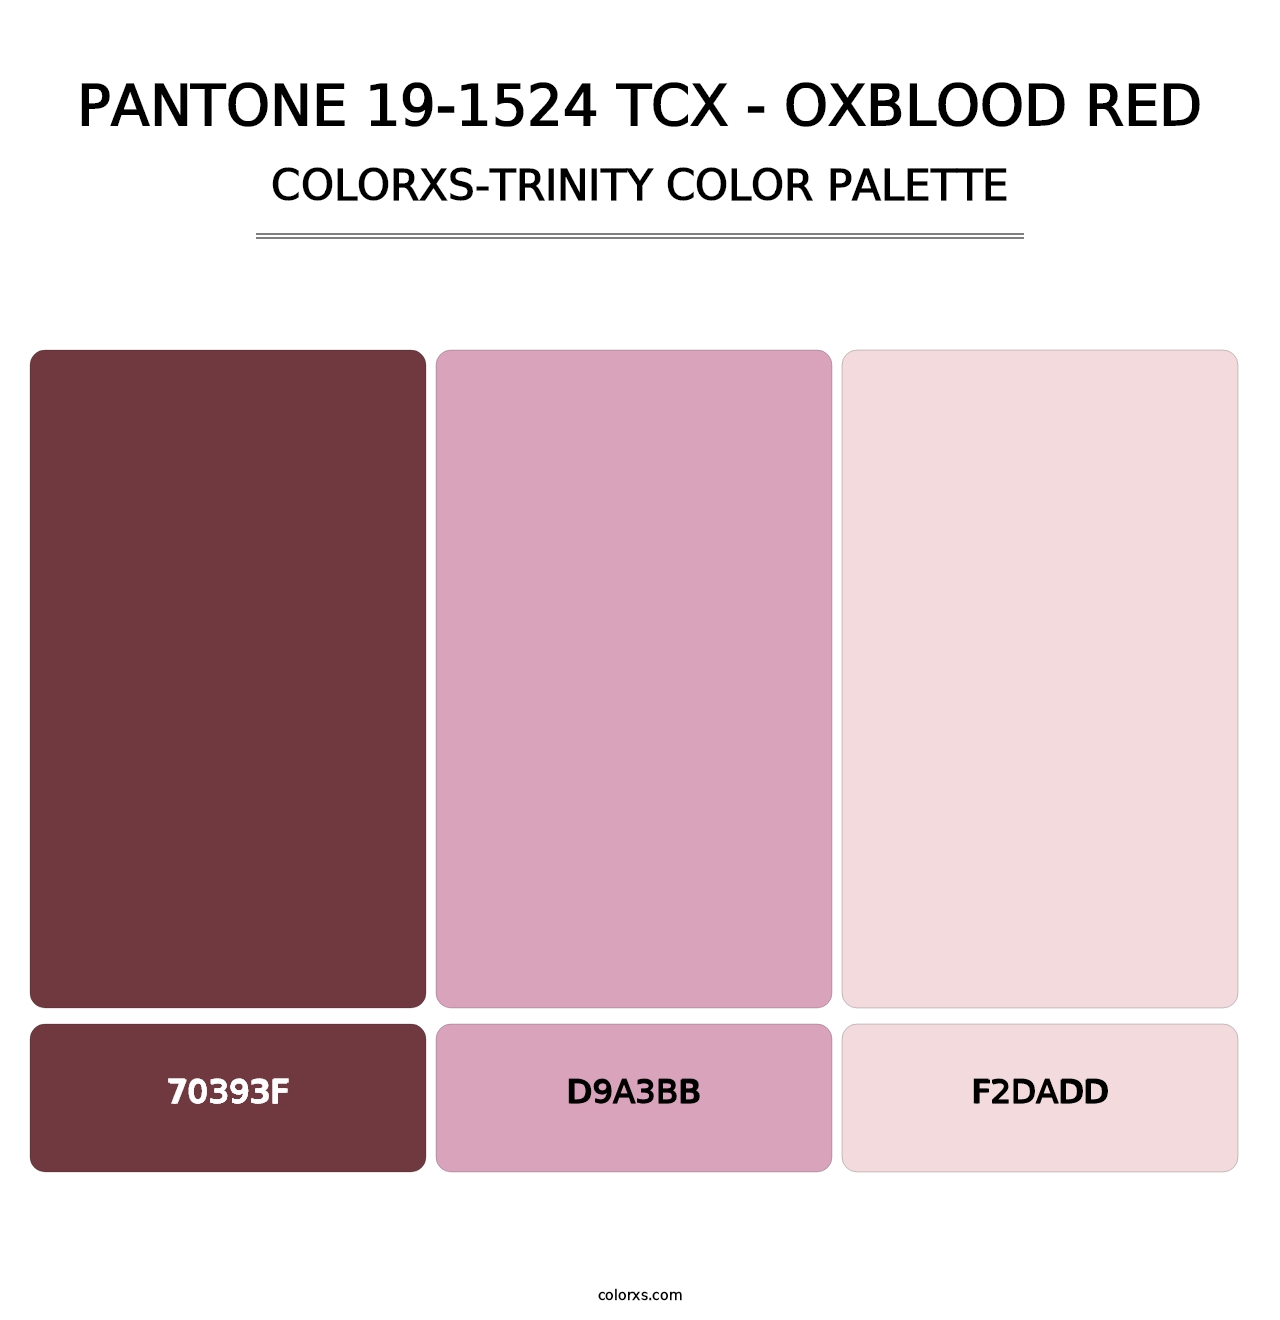 PANTONE 19-1524 TCX - Oxblood Red - Colorxs Trinity Palette